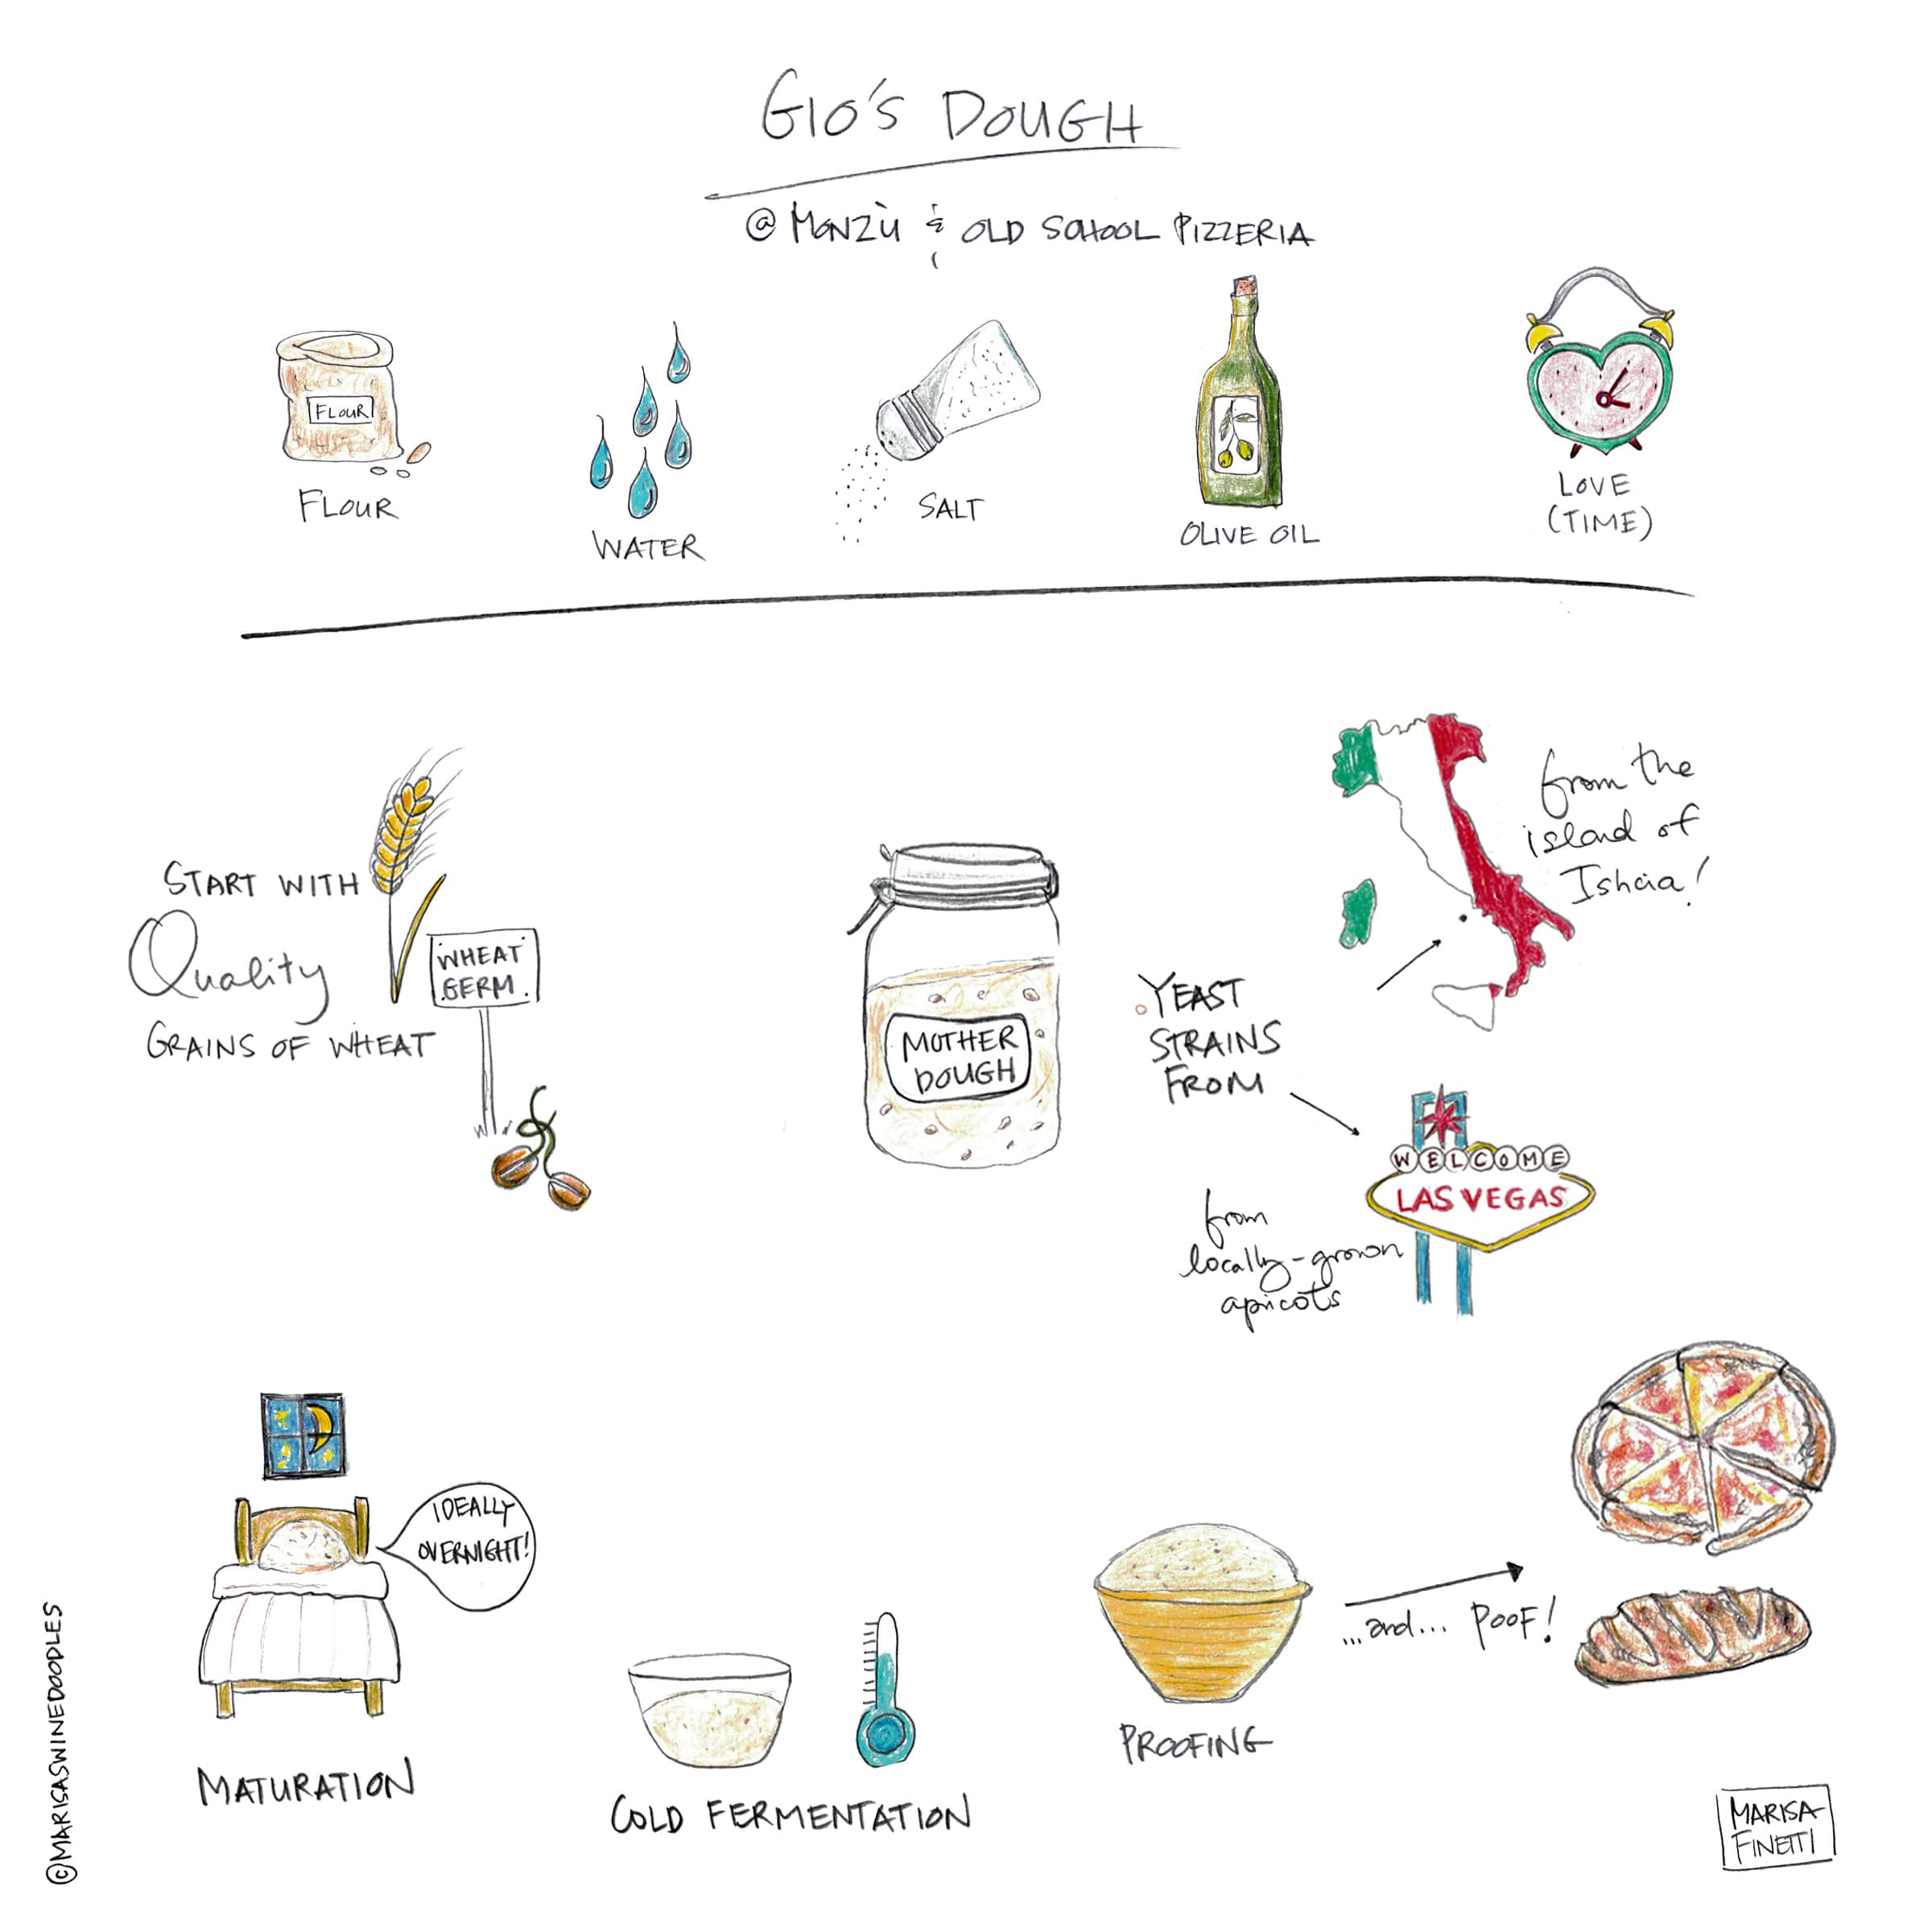 Gio's dough making process via Marisa's doodles - gluten theory